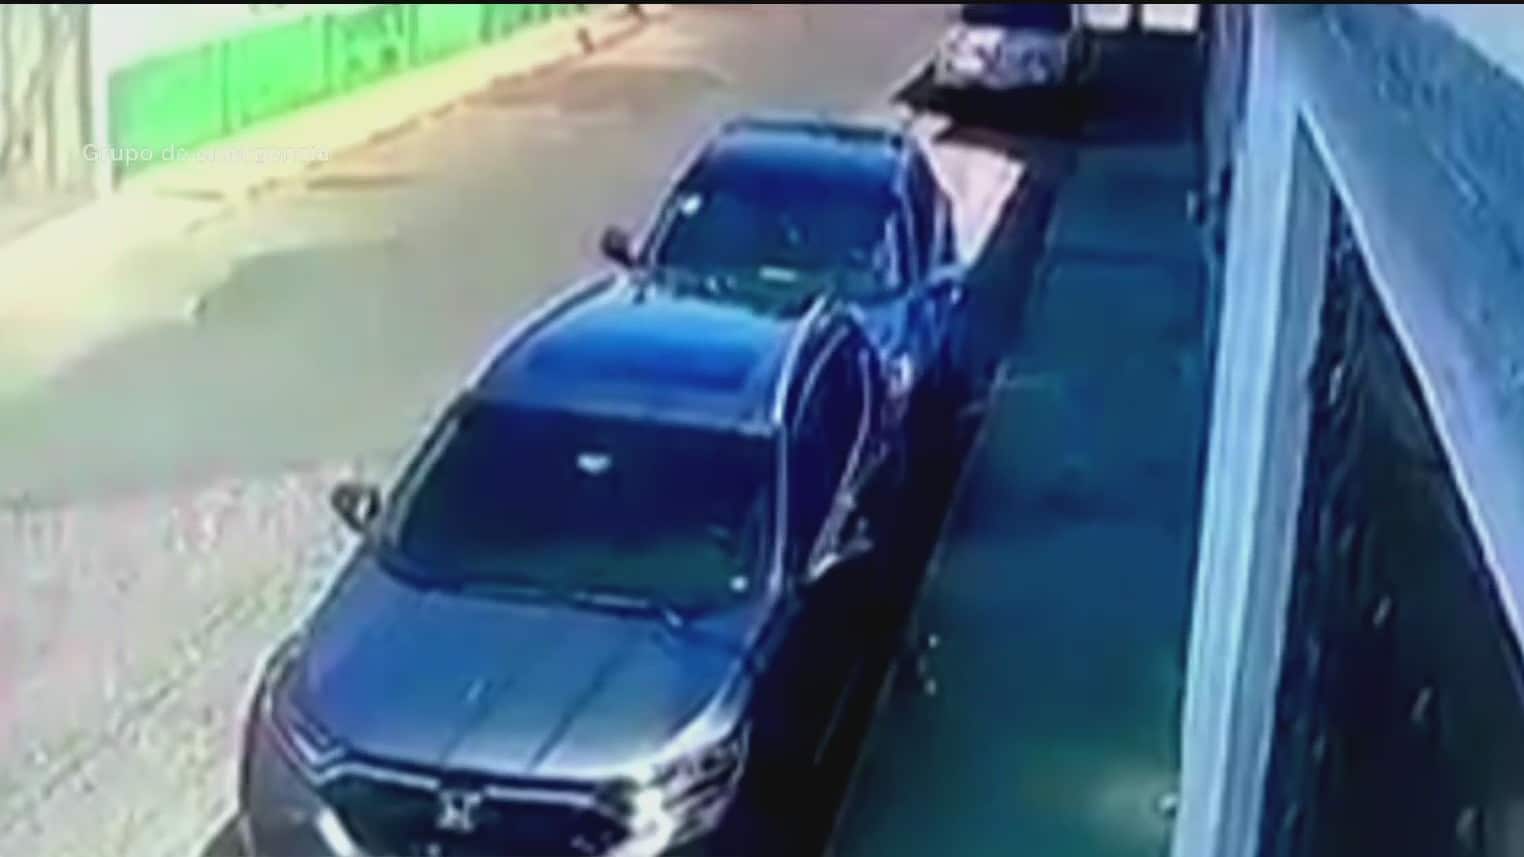 video sujeto roba camioneta estacionada en 1 minuto 22 segundos en jalisco